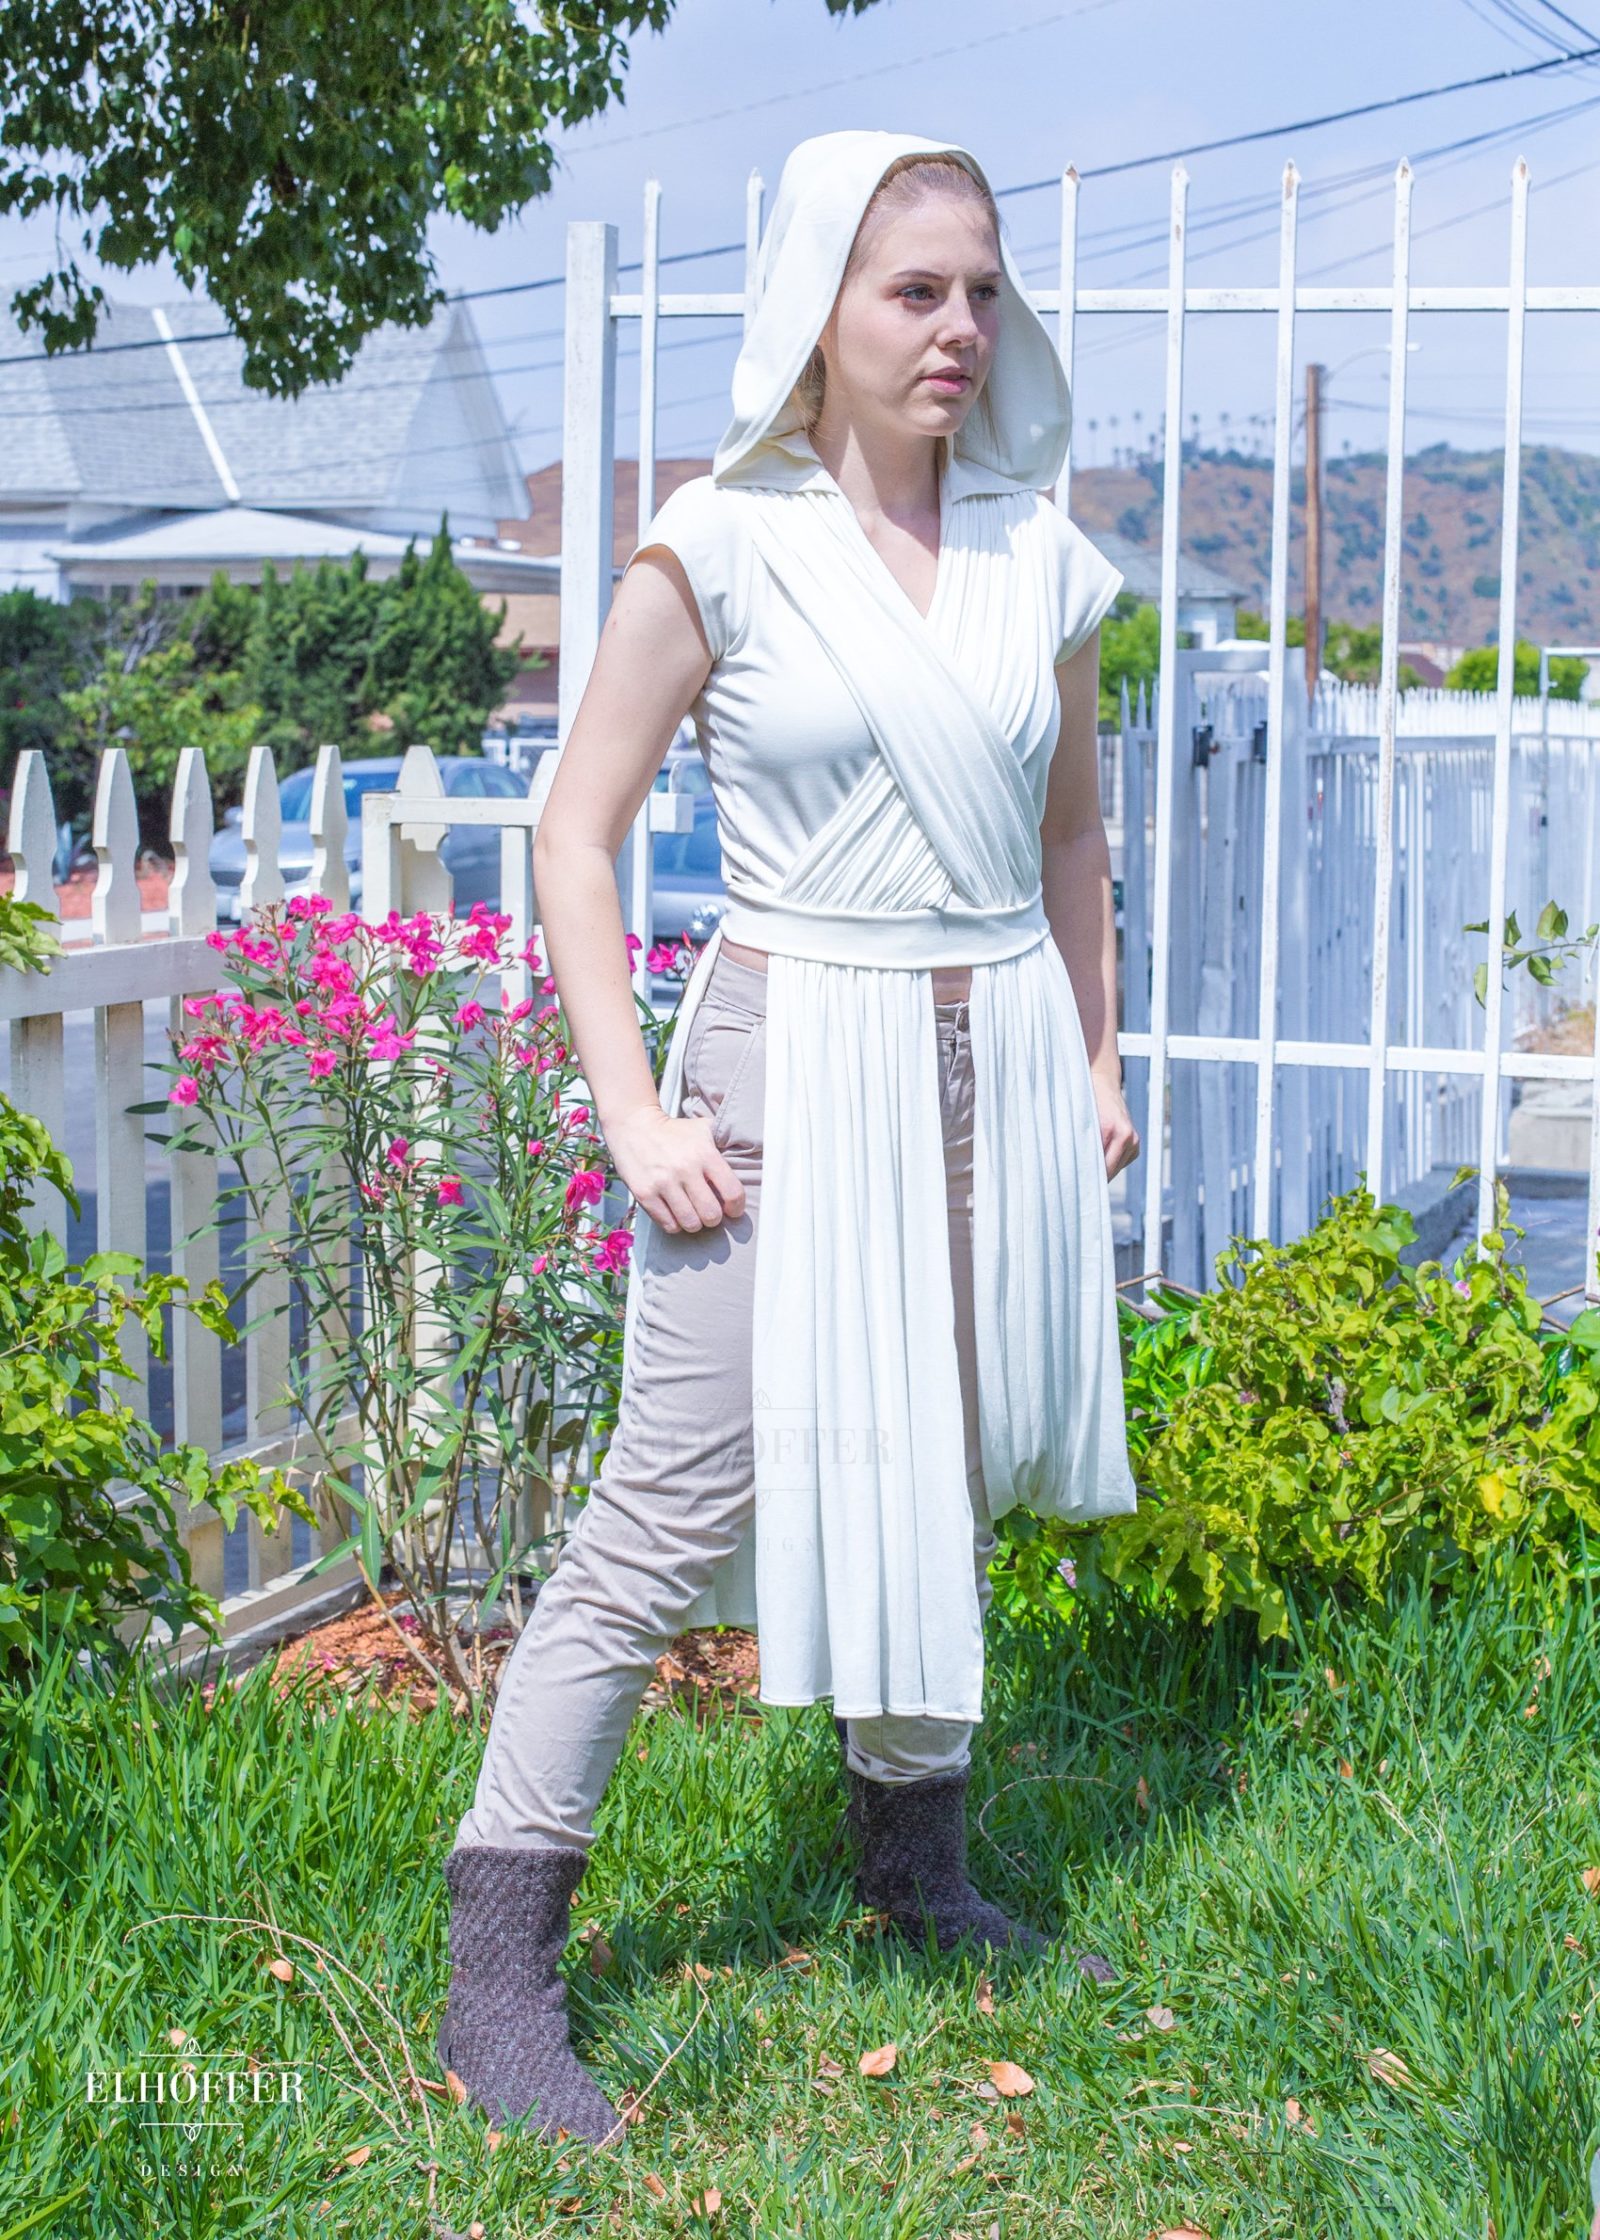 Elhoffer Design - Star Wars Rey Inspired Galactic Scavenger Hooded Top